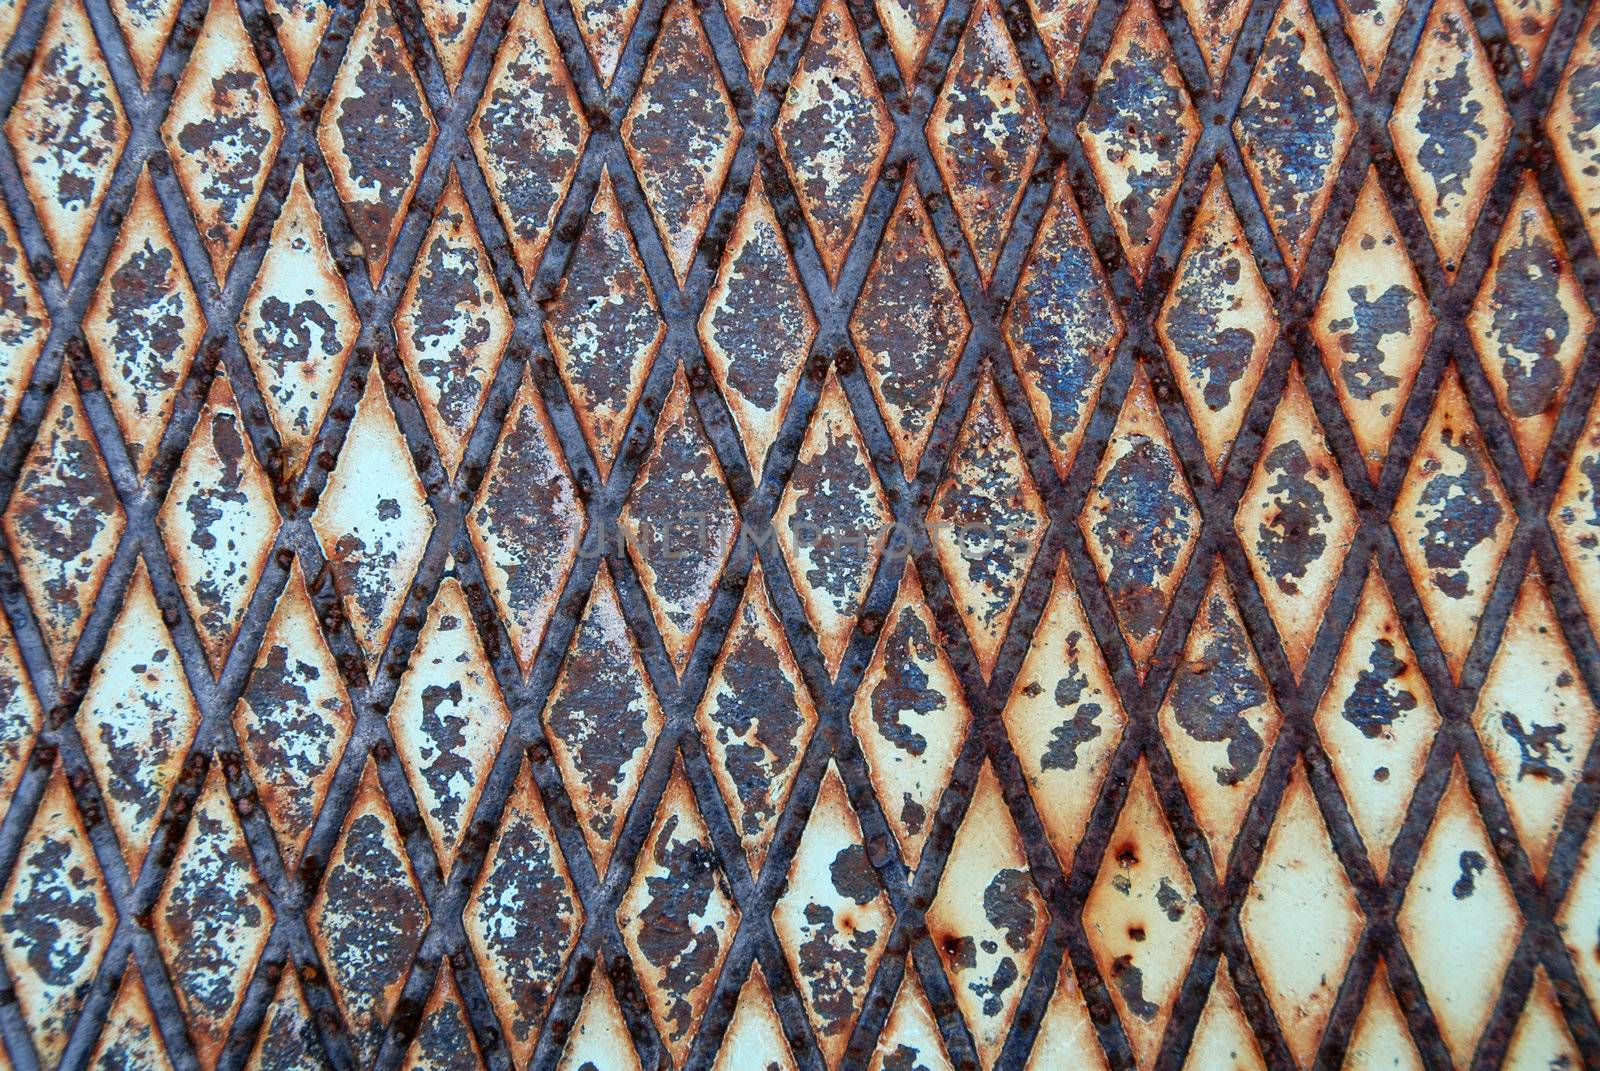 Rusty metal texture by Gjermund